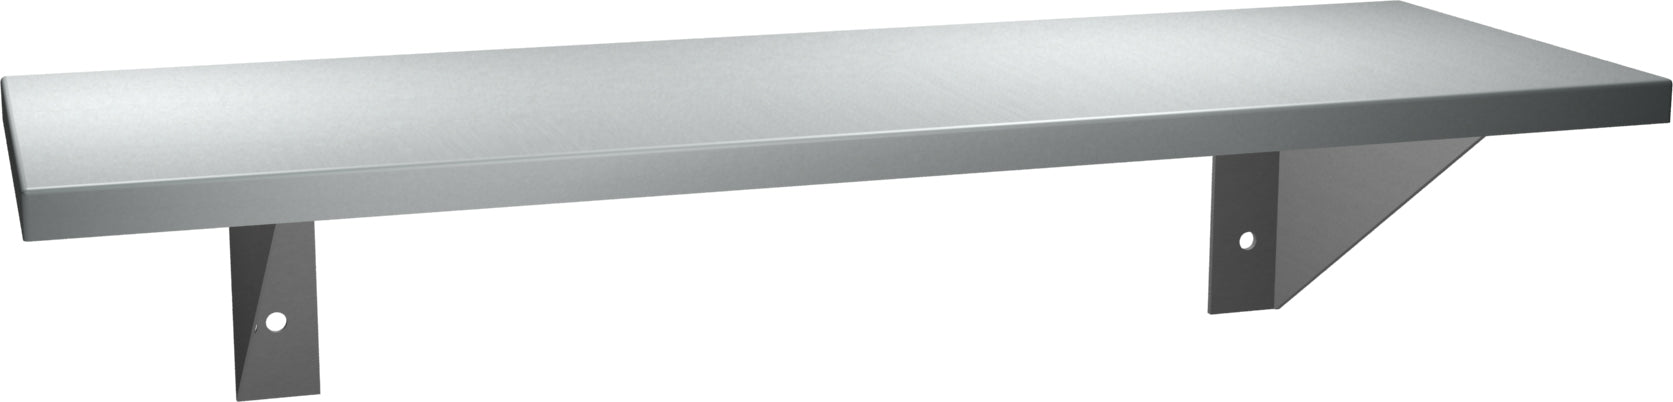 ASI 0692-636 Shelf, Stainless Steel, 6 X 36 Inch